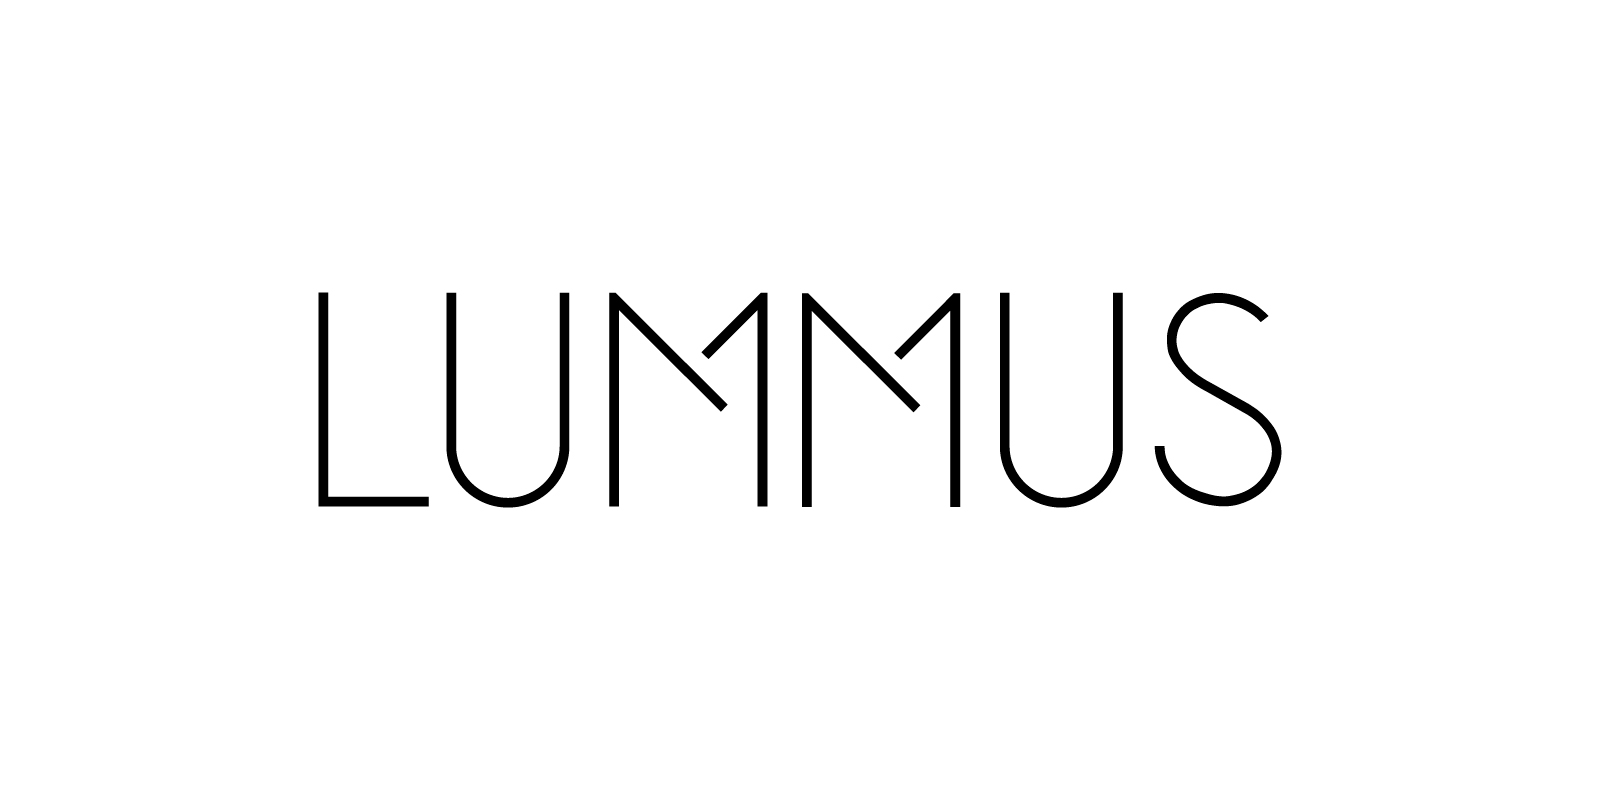 Lummus product line case study - Identity